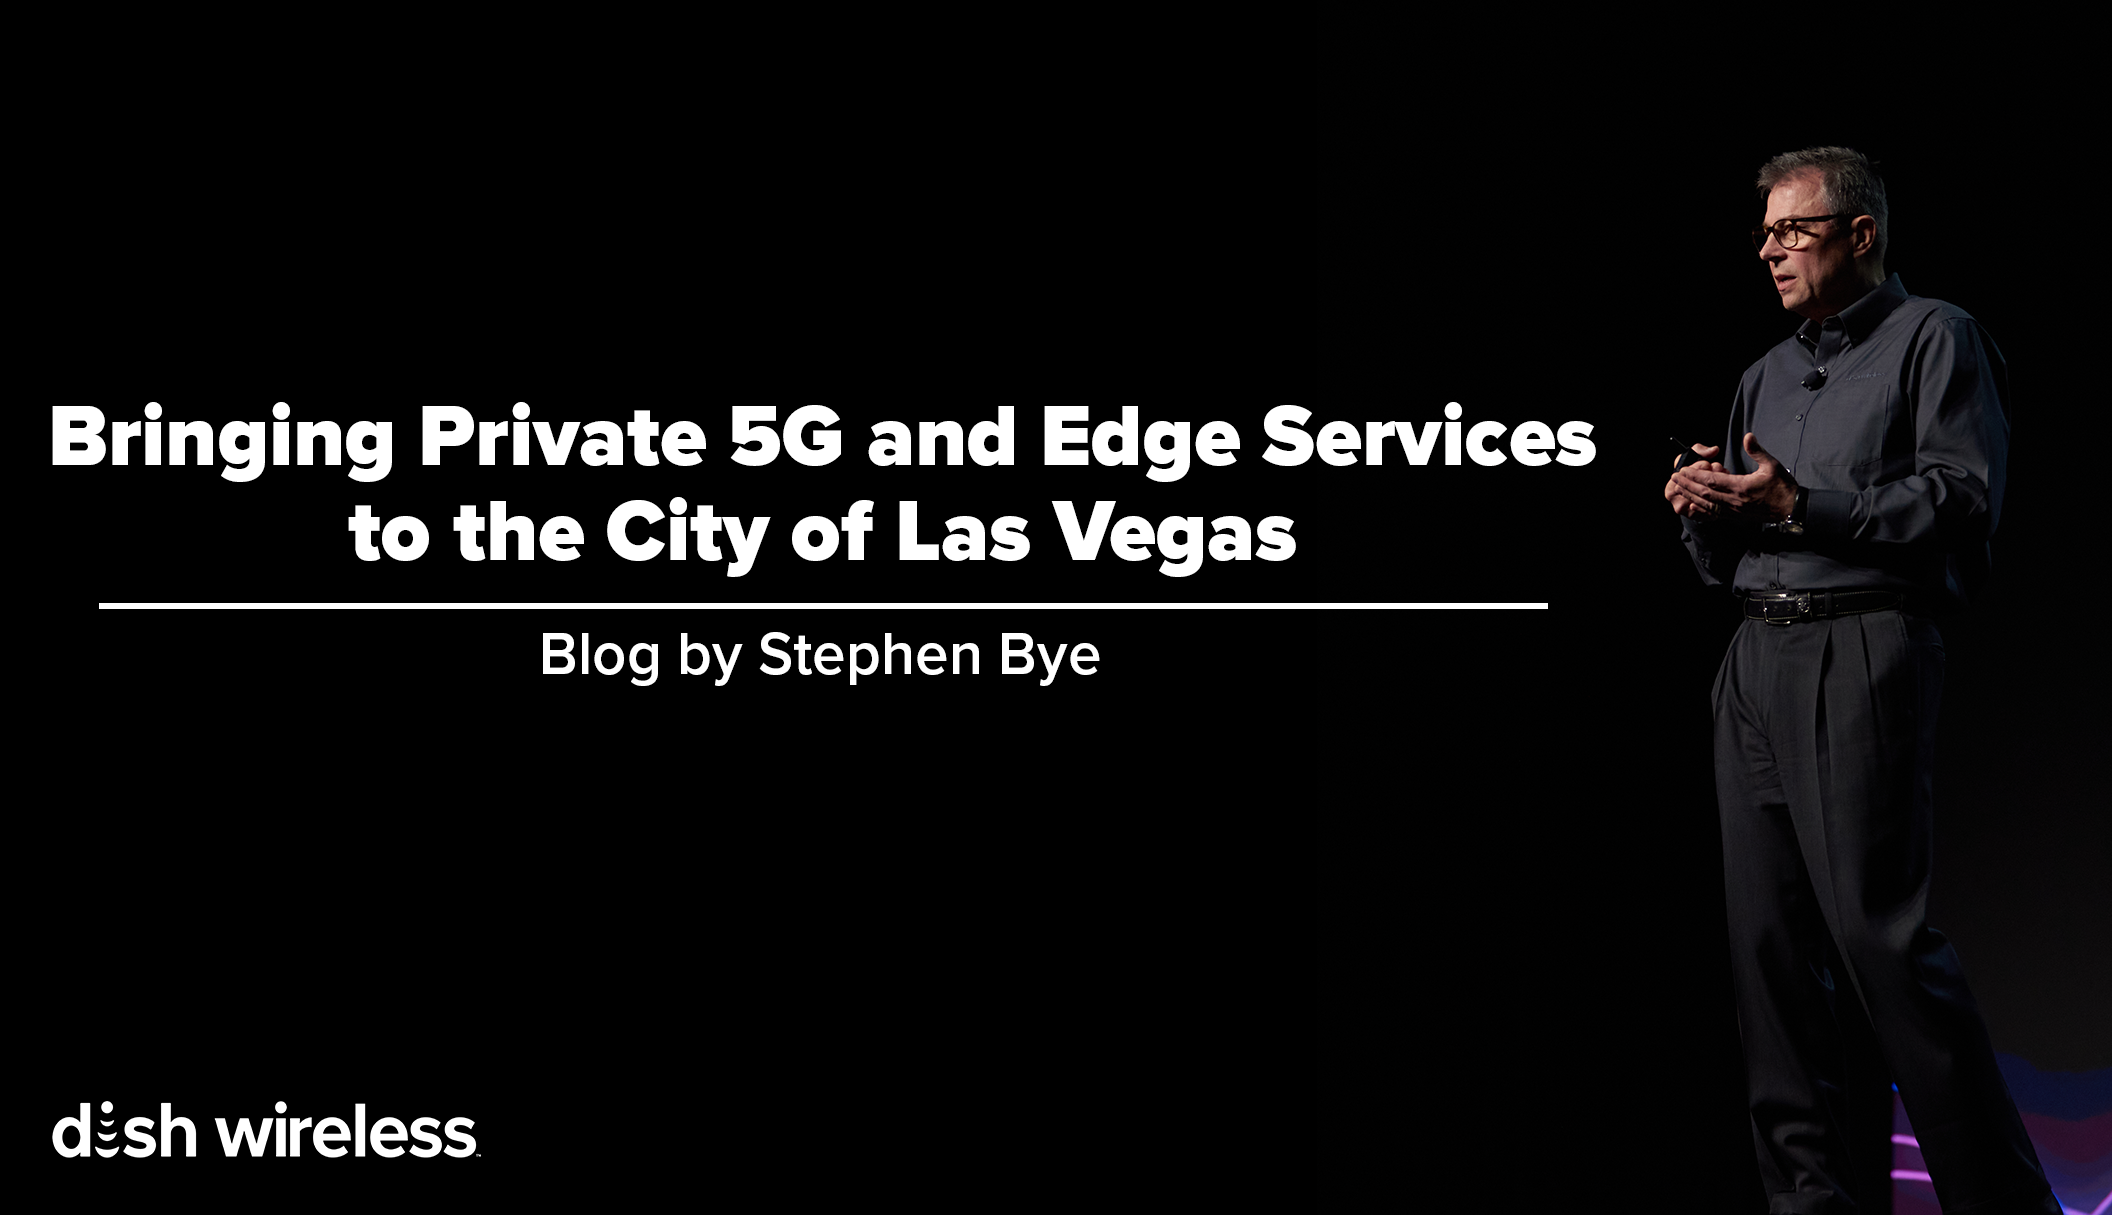 DISH Wireless blog: stephen bye 5g edge services in Las Vegas